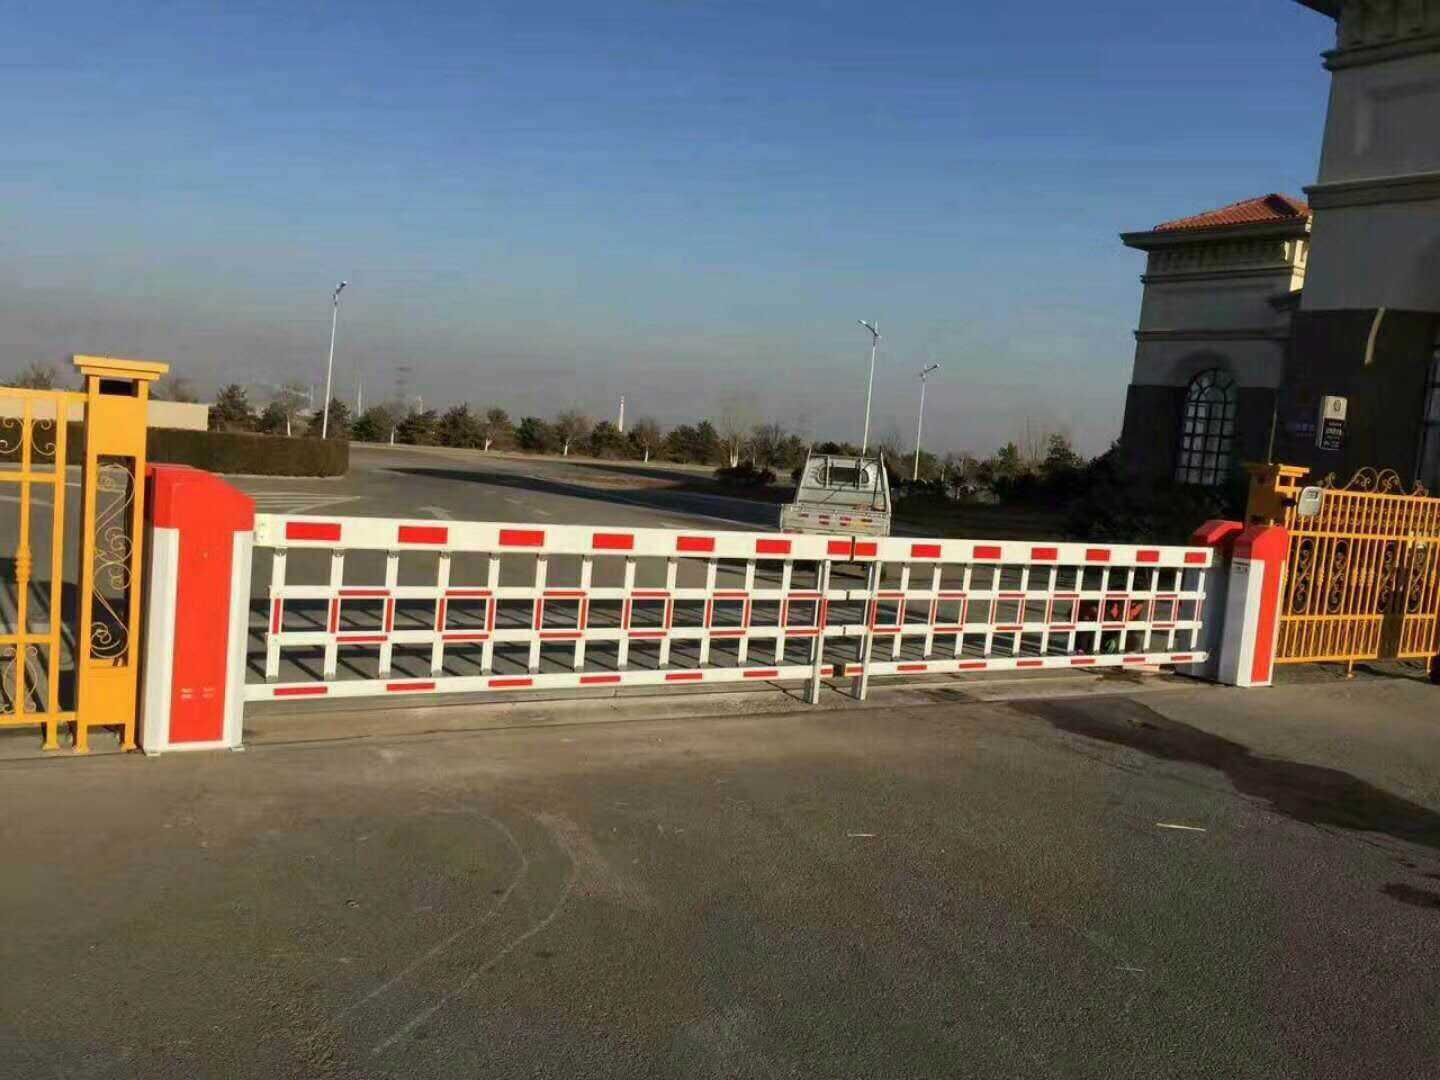 The New car access aluminum alloy barrier gate parking barrier gate